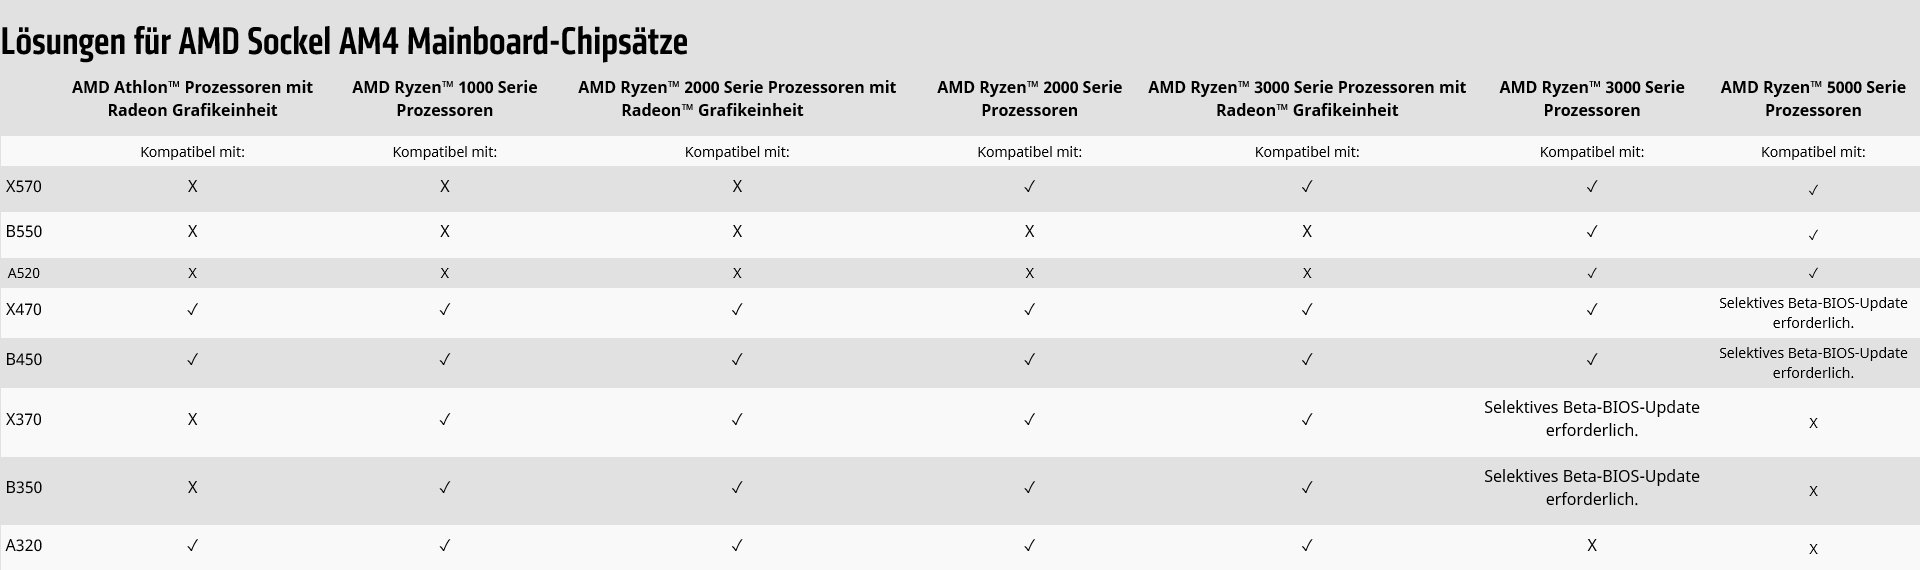 Screenshot_2021-05-01 AMD X570 Mainboards.png